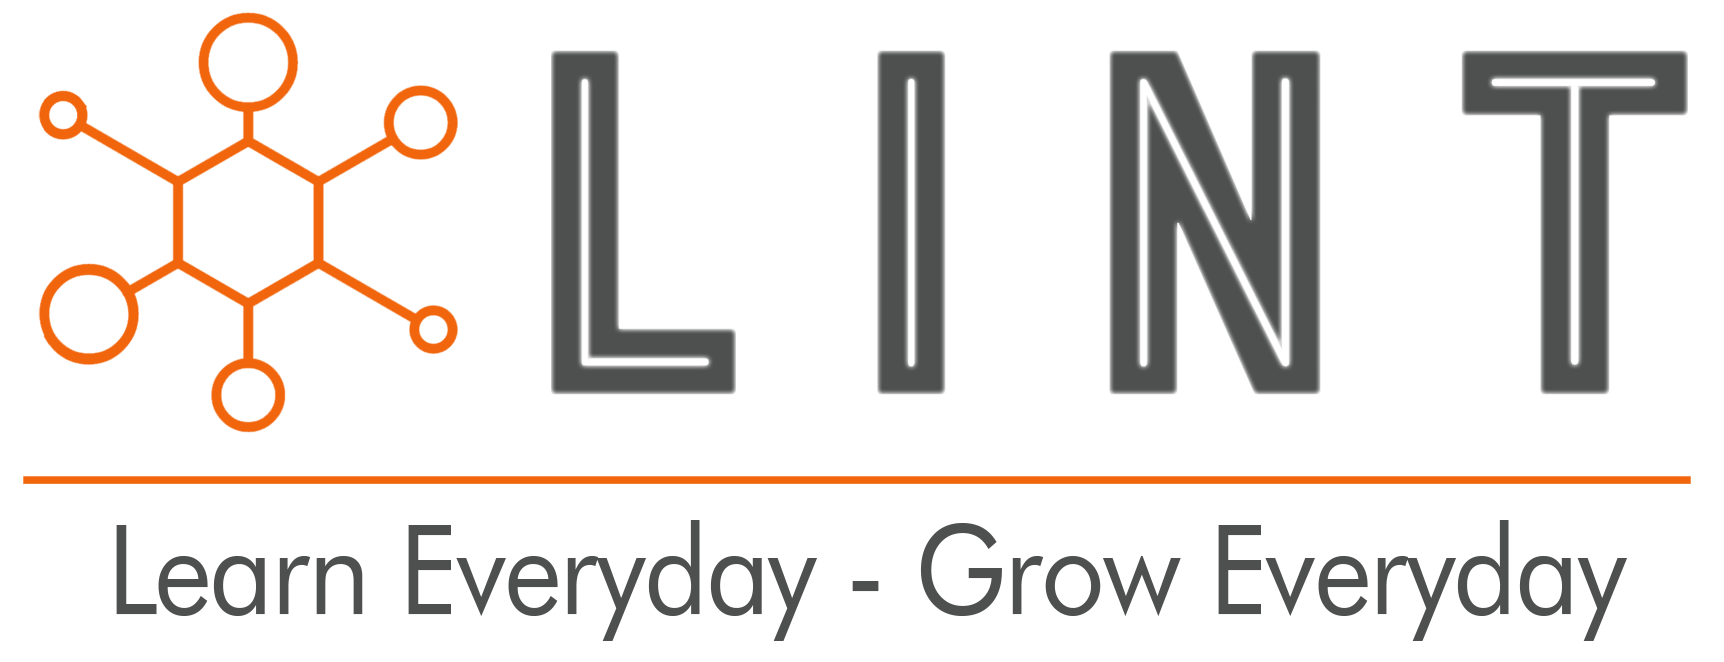 LINT bNew logo